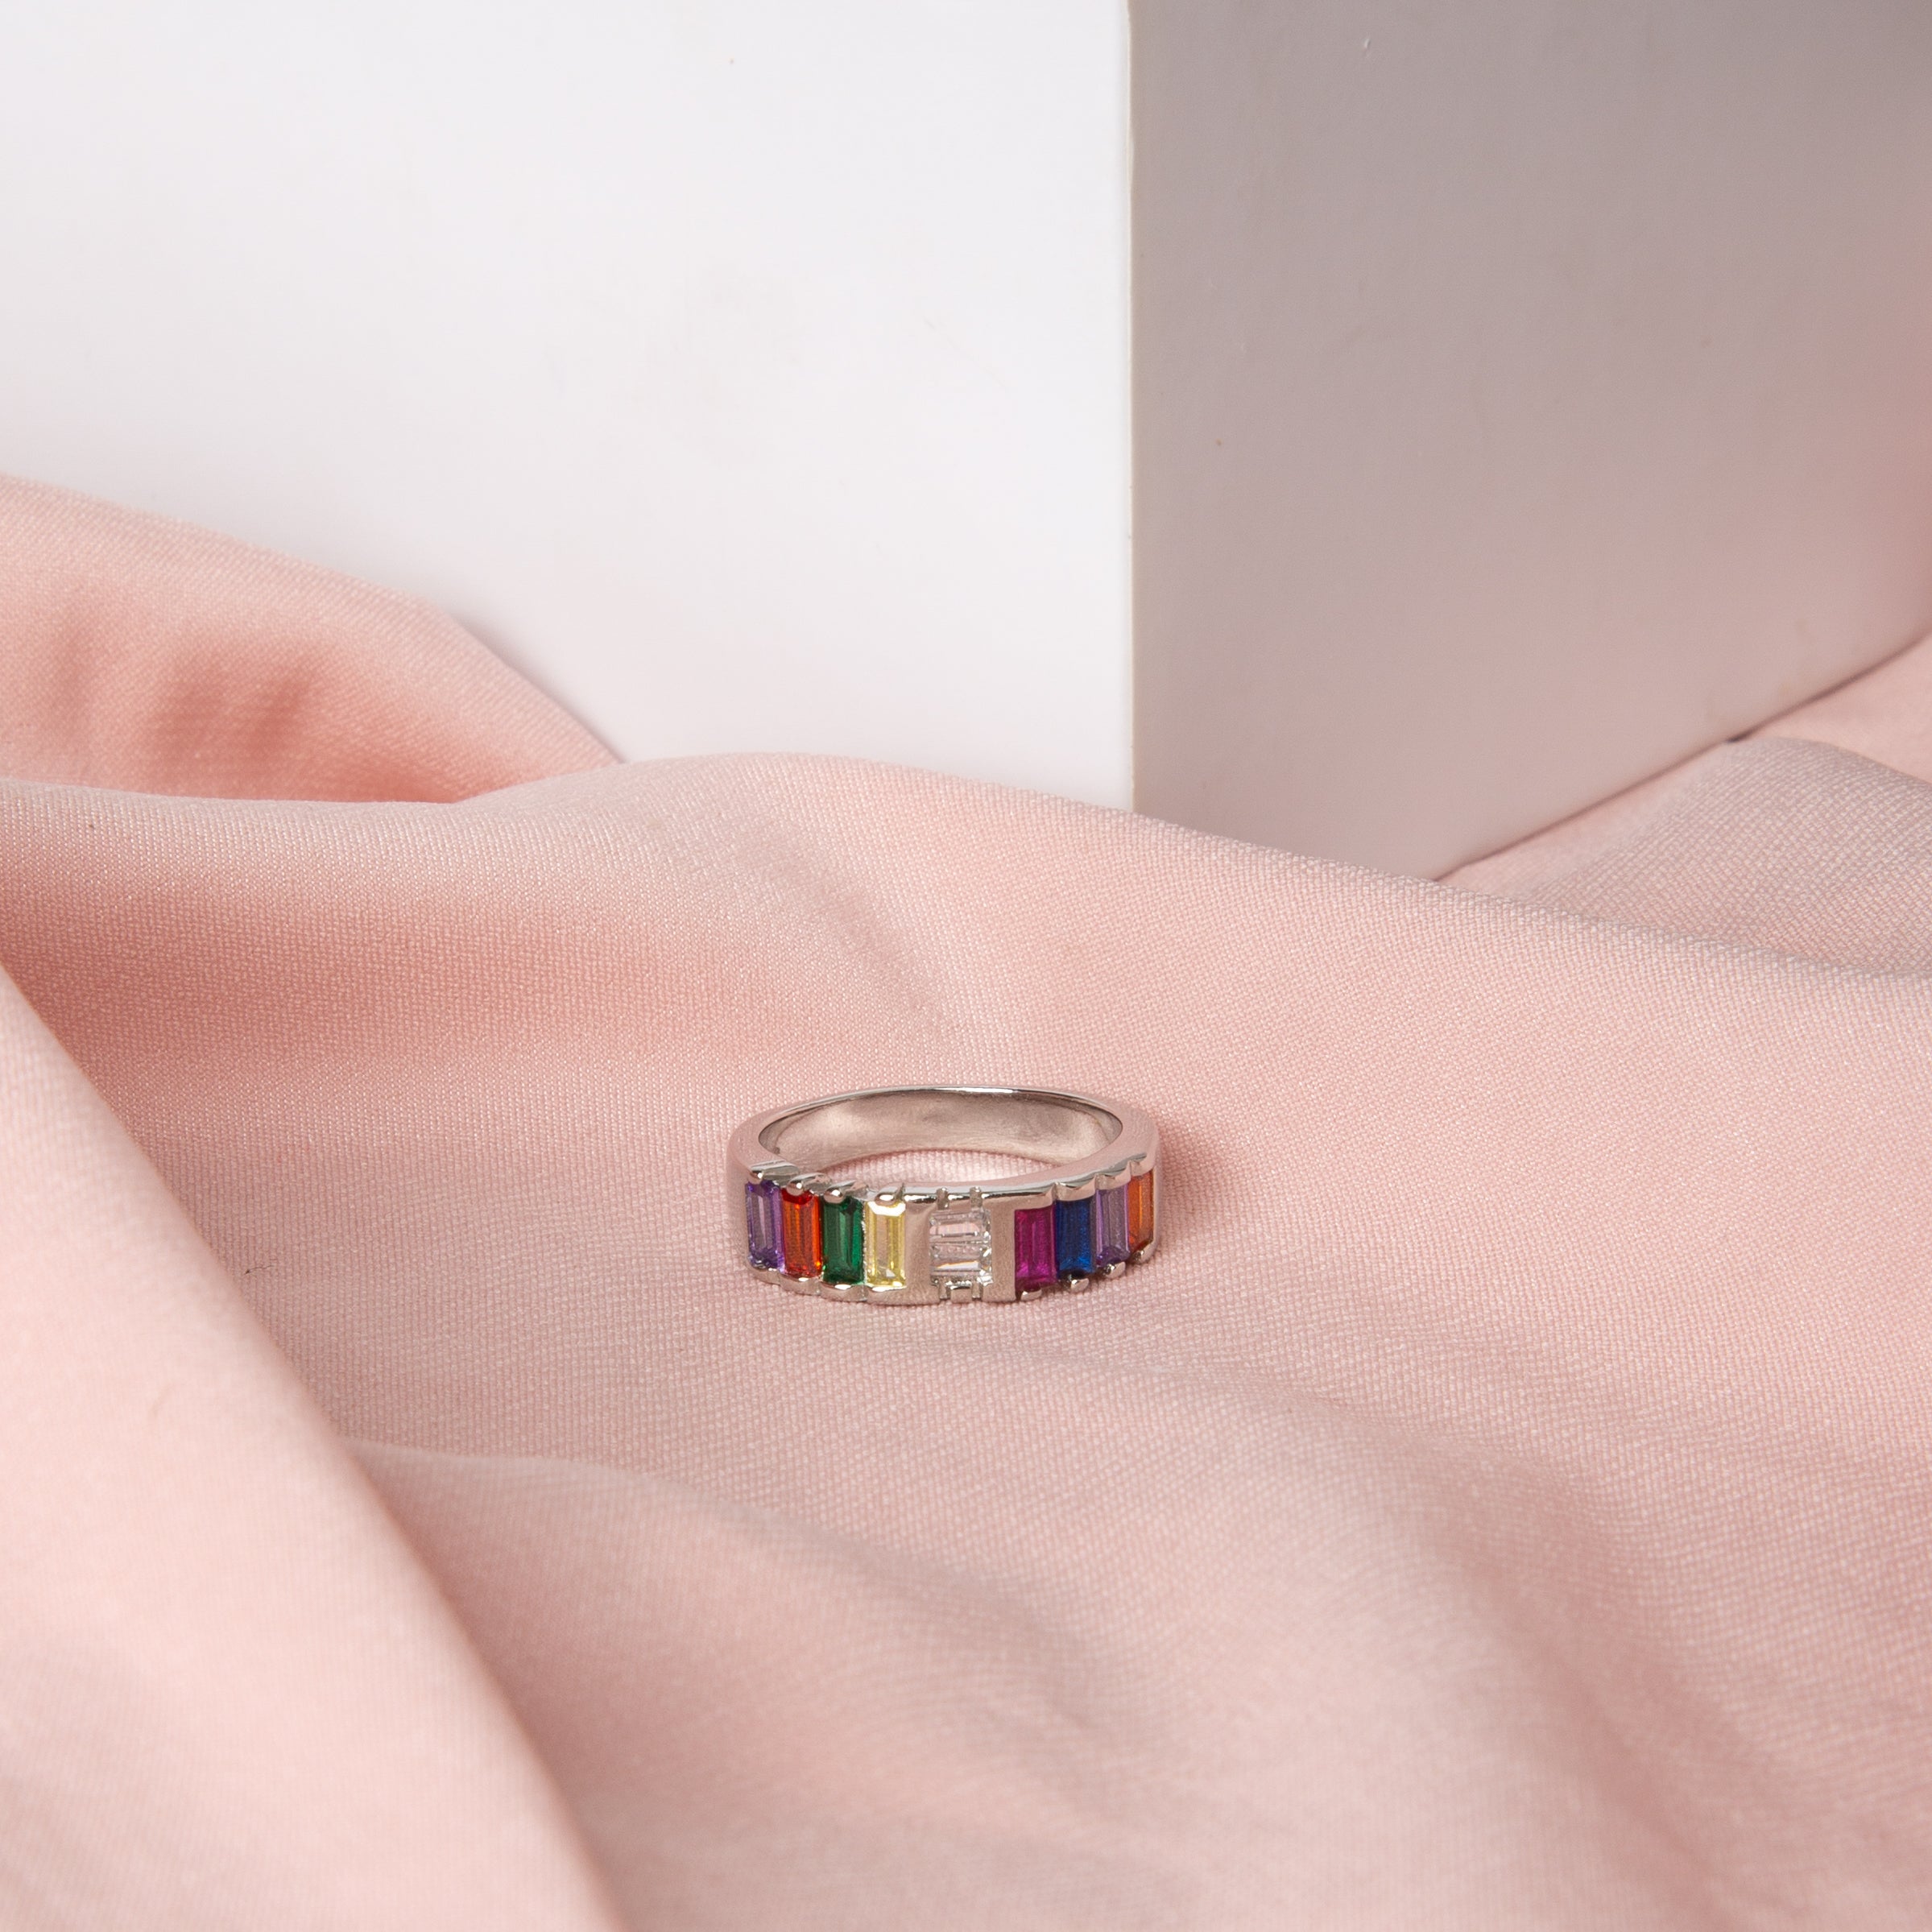 The Rainbow Belt Ring